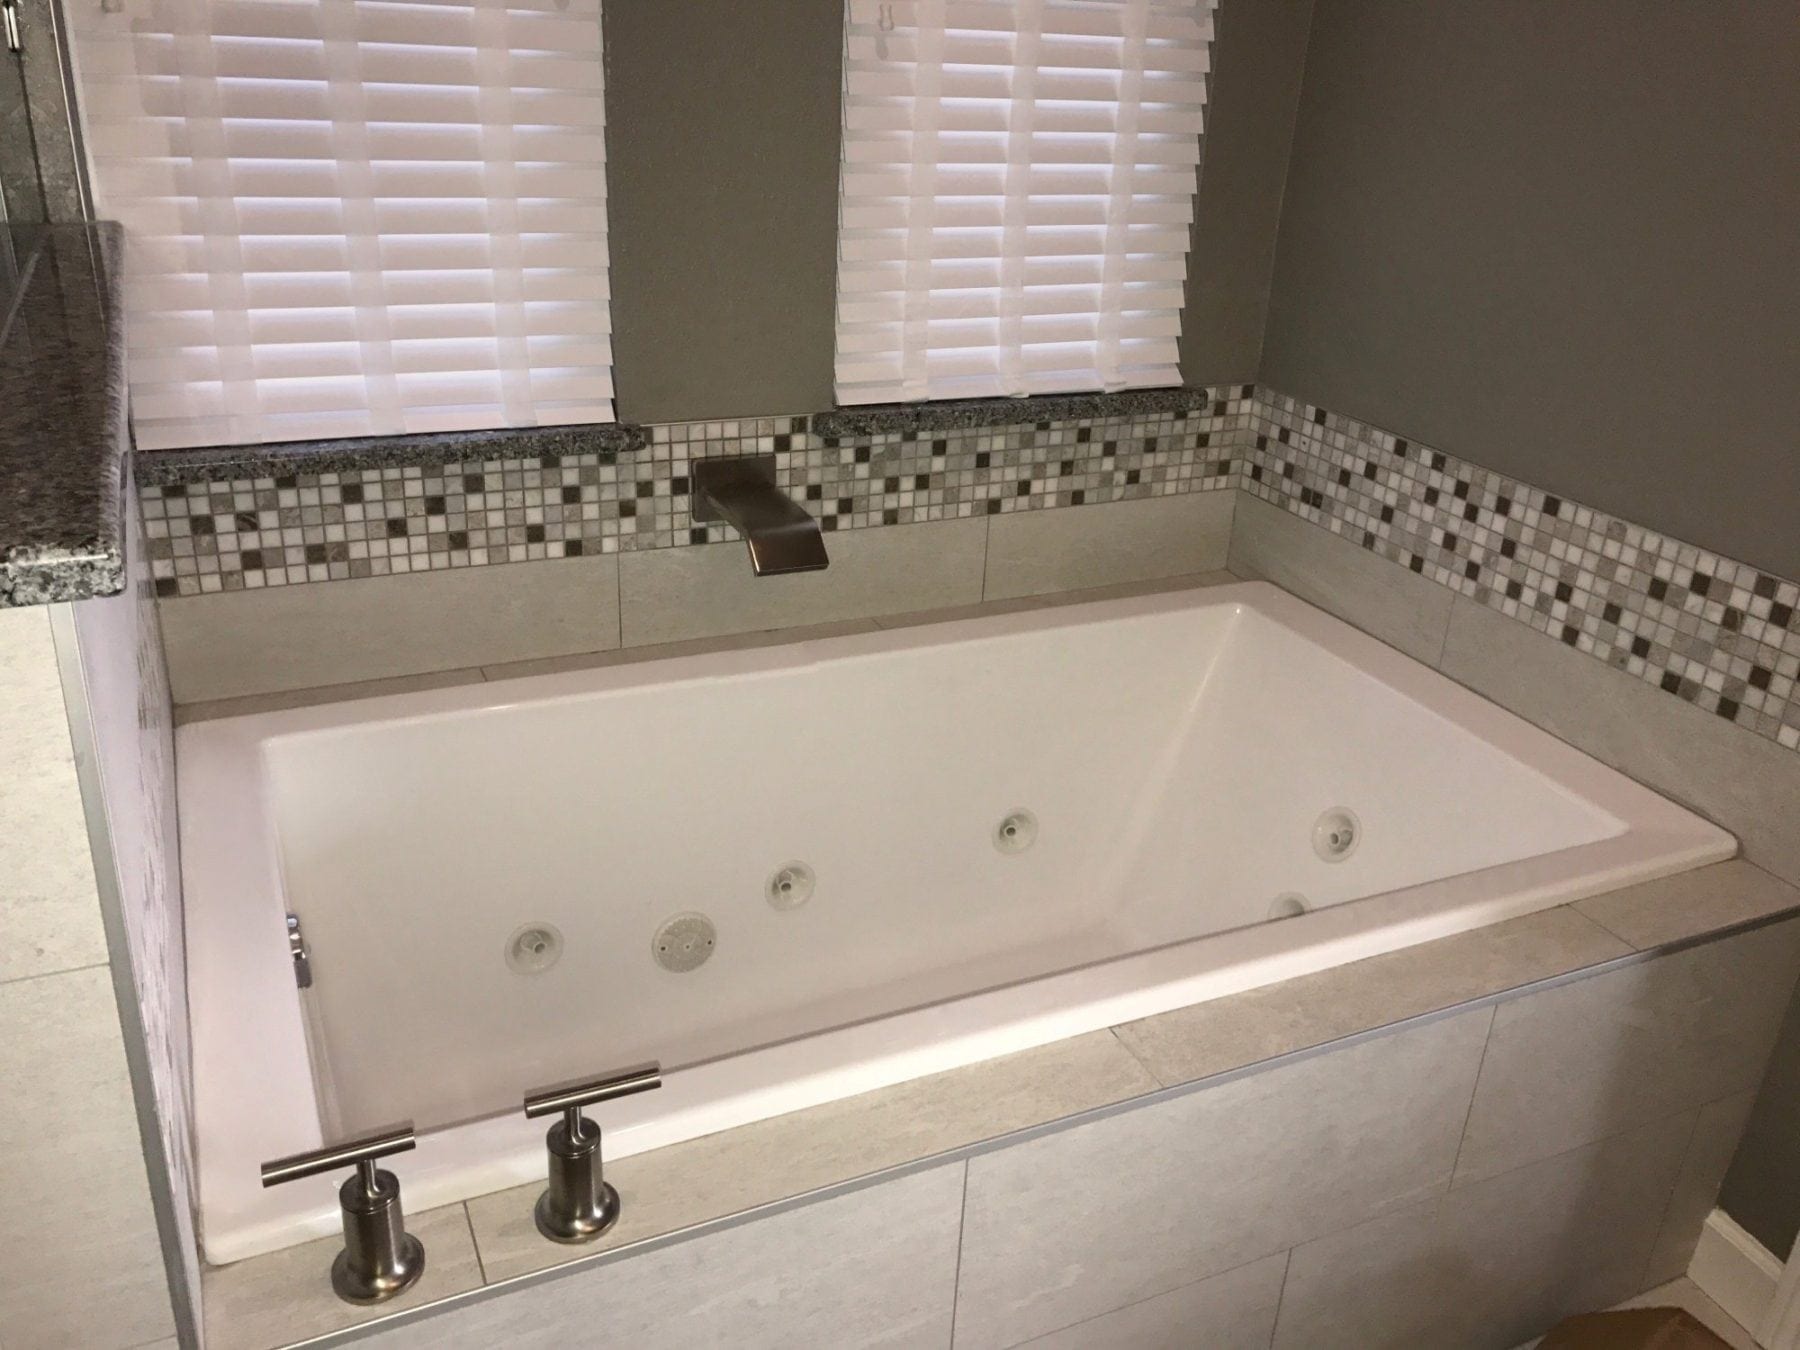 Oak Lawn Condo Bathroom Remodel During Renovation Bath Tub With